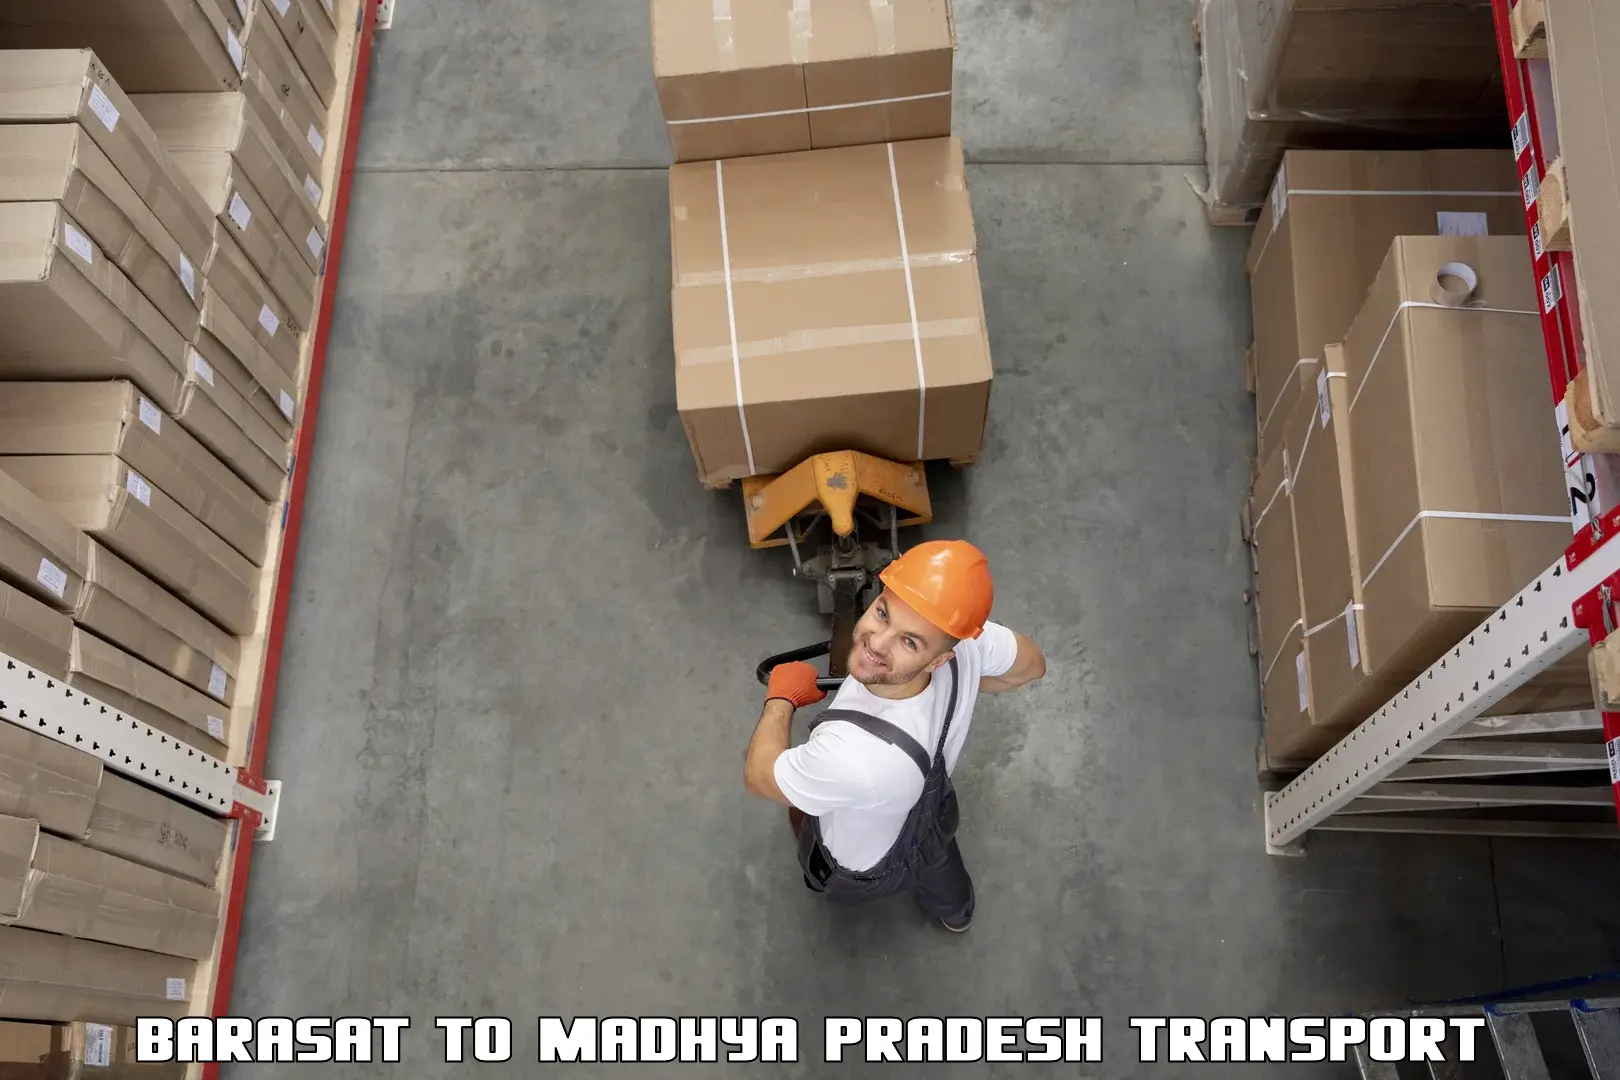 Shipping partner Barasat to Ashoknagar